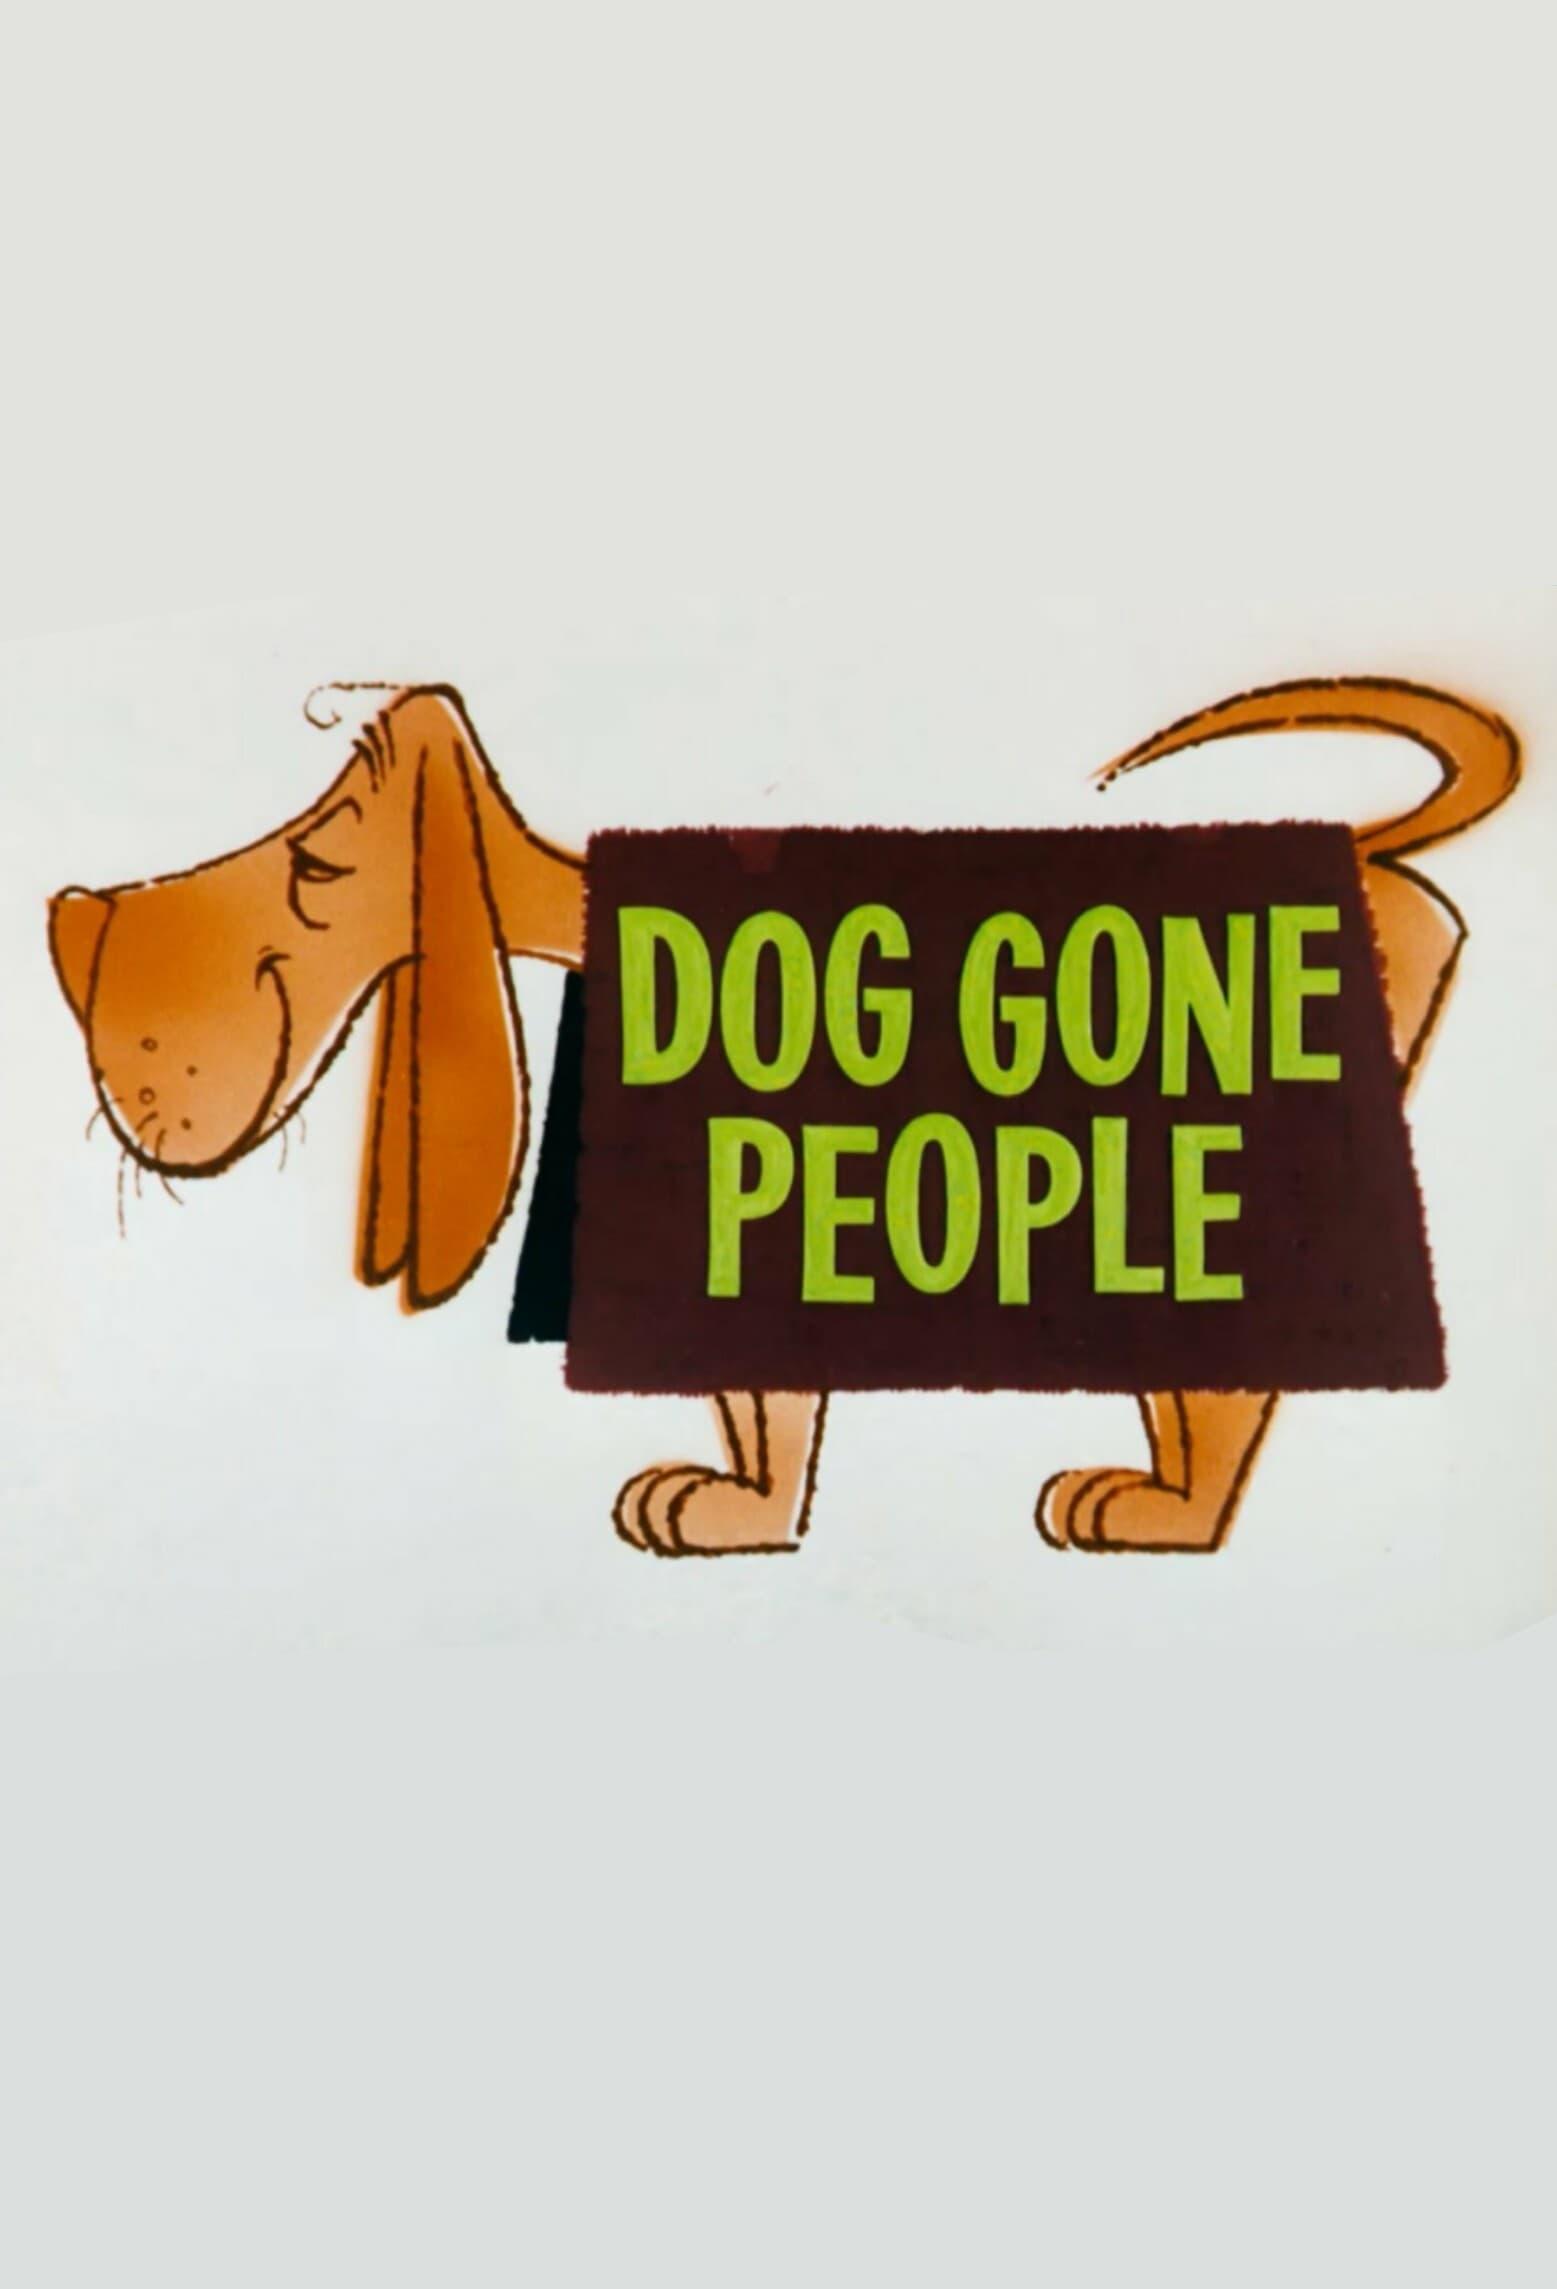 Dog Gone People poster